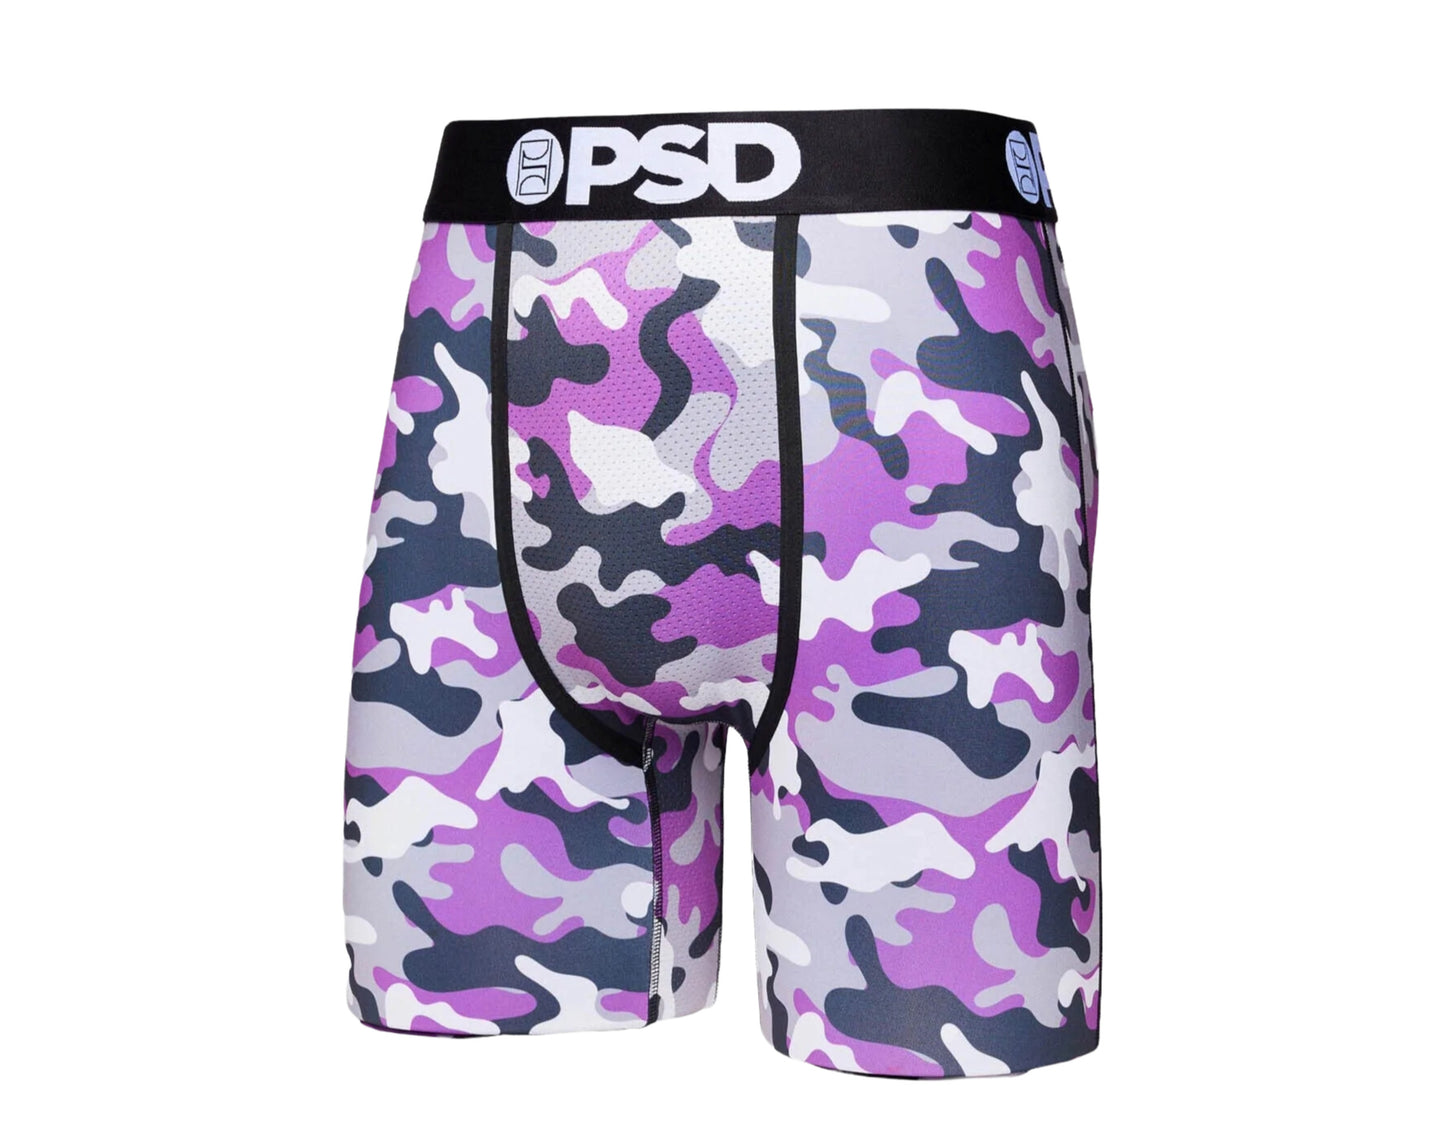 PSD Fall Camo - 3-Pack Boxer Briefs Men's Underwear